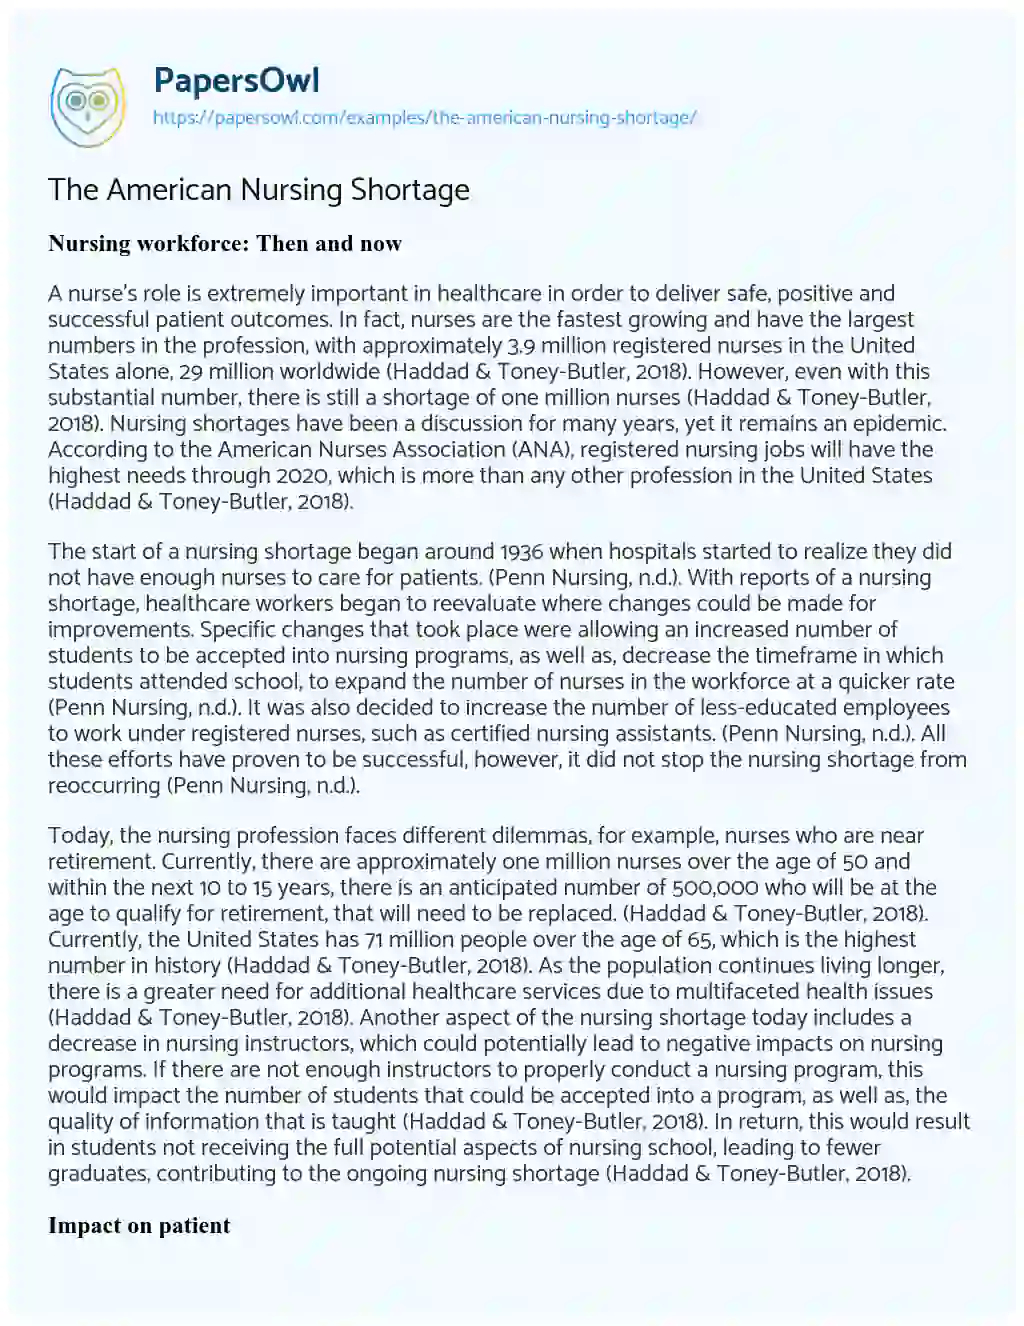 Essay on The American Nursing Shortage